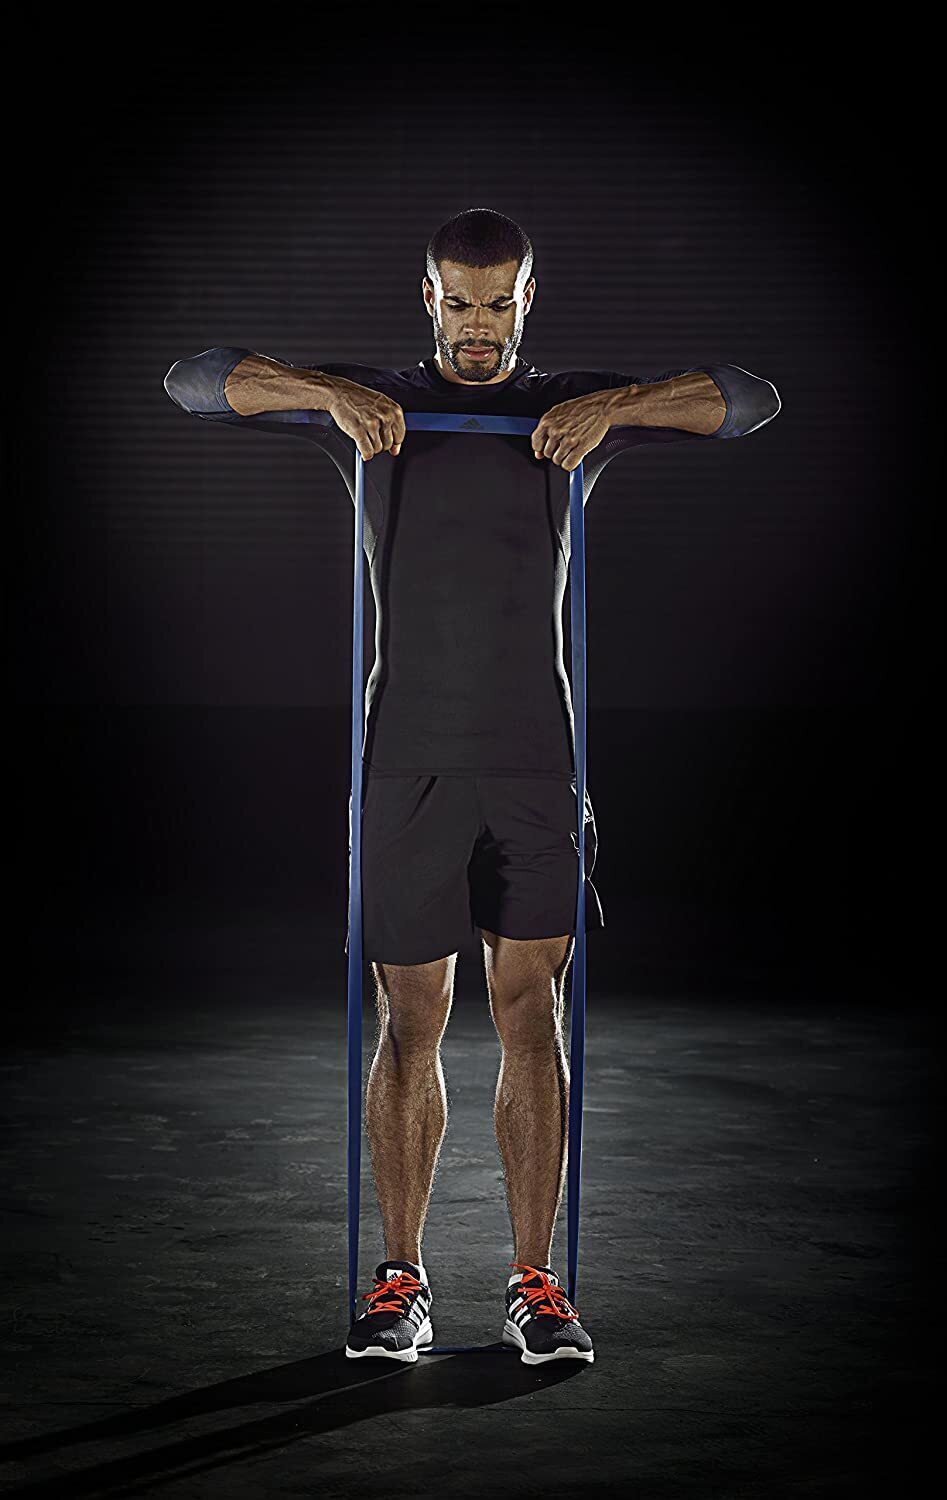 Adidas LIGHT RESISTANCE Large Power Band Strength Fitness Exercise Gym Yoga